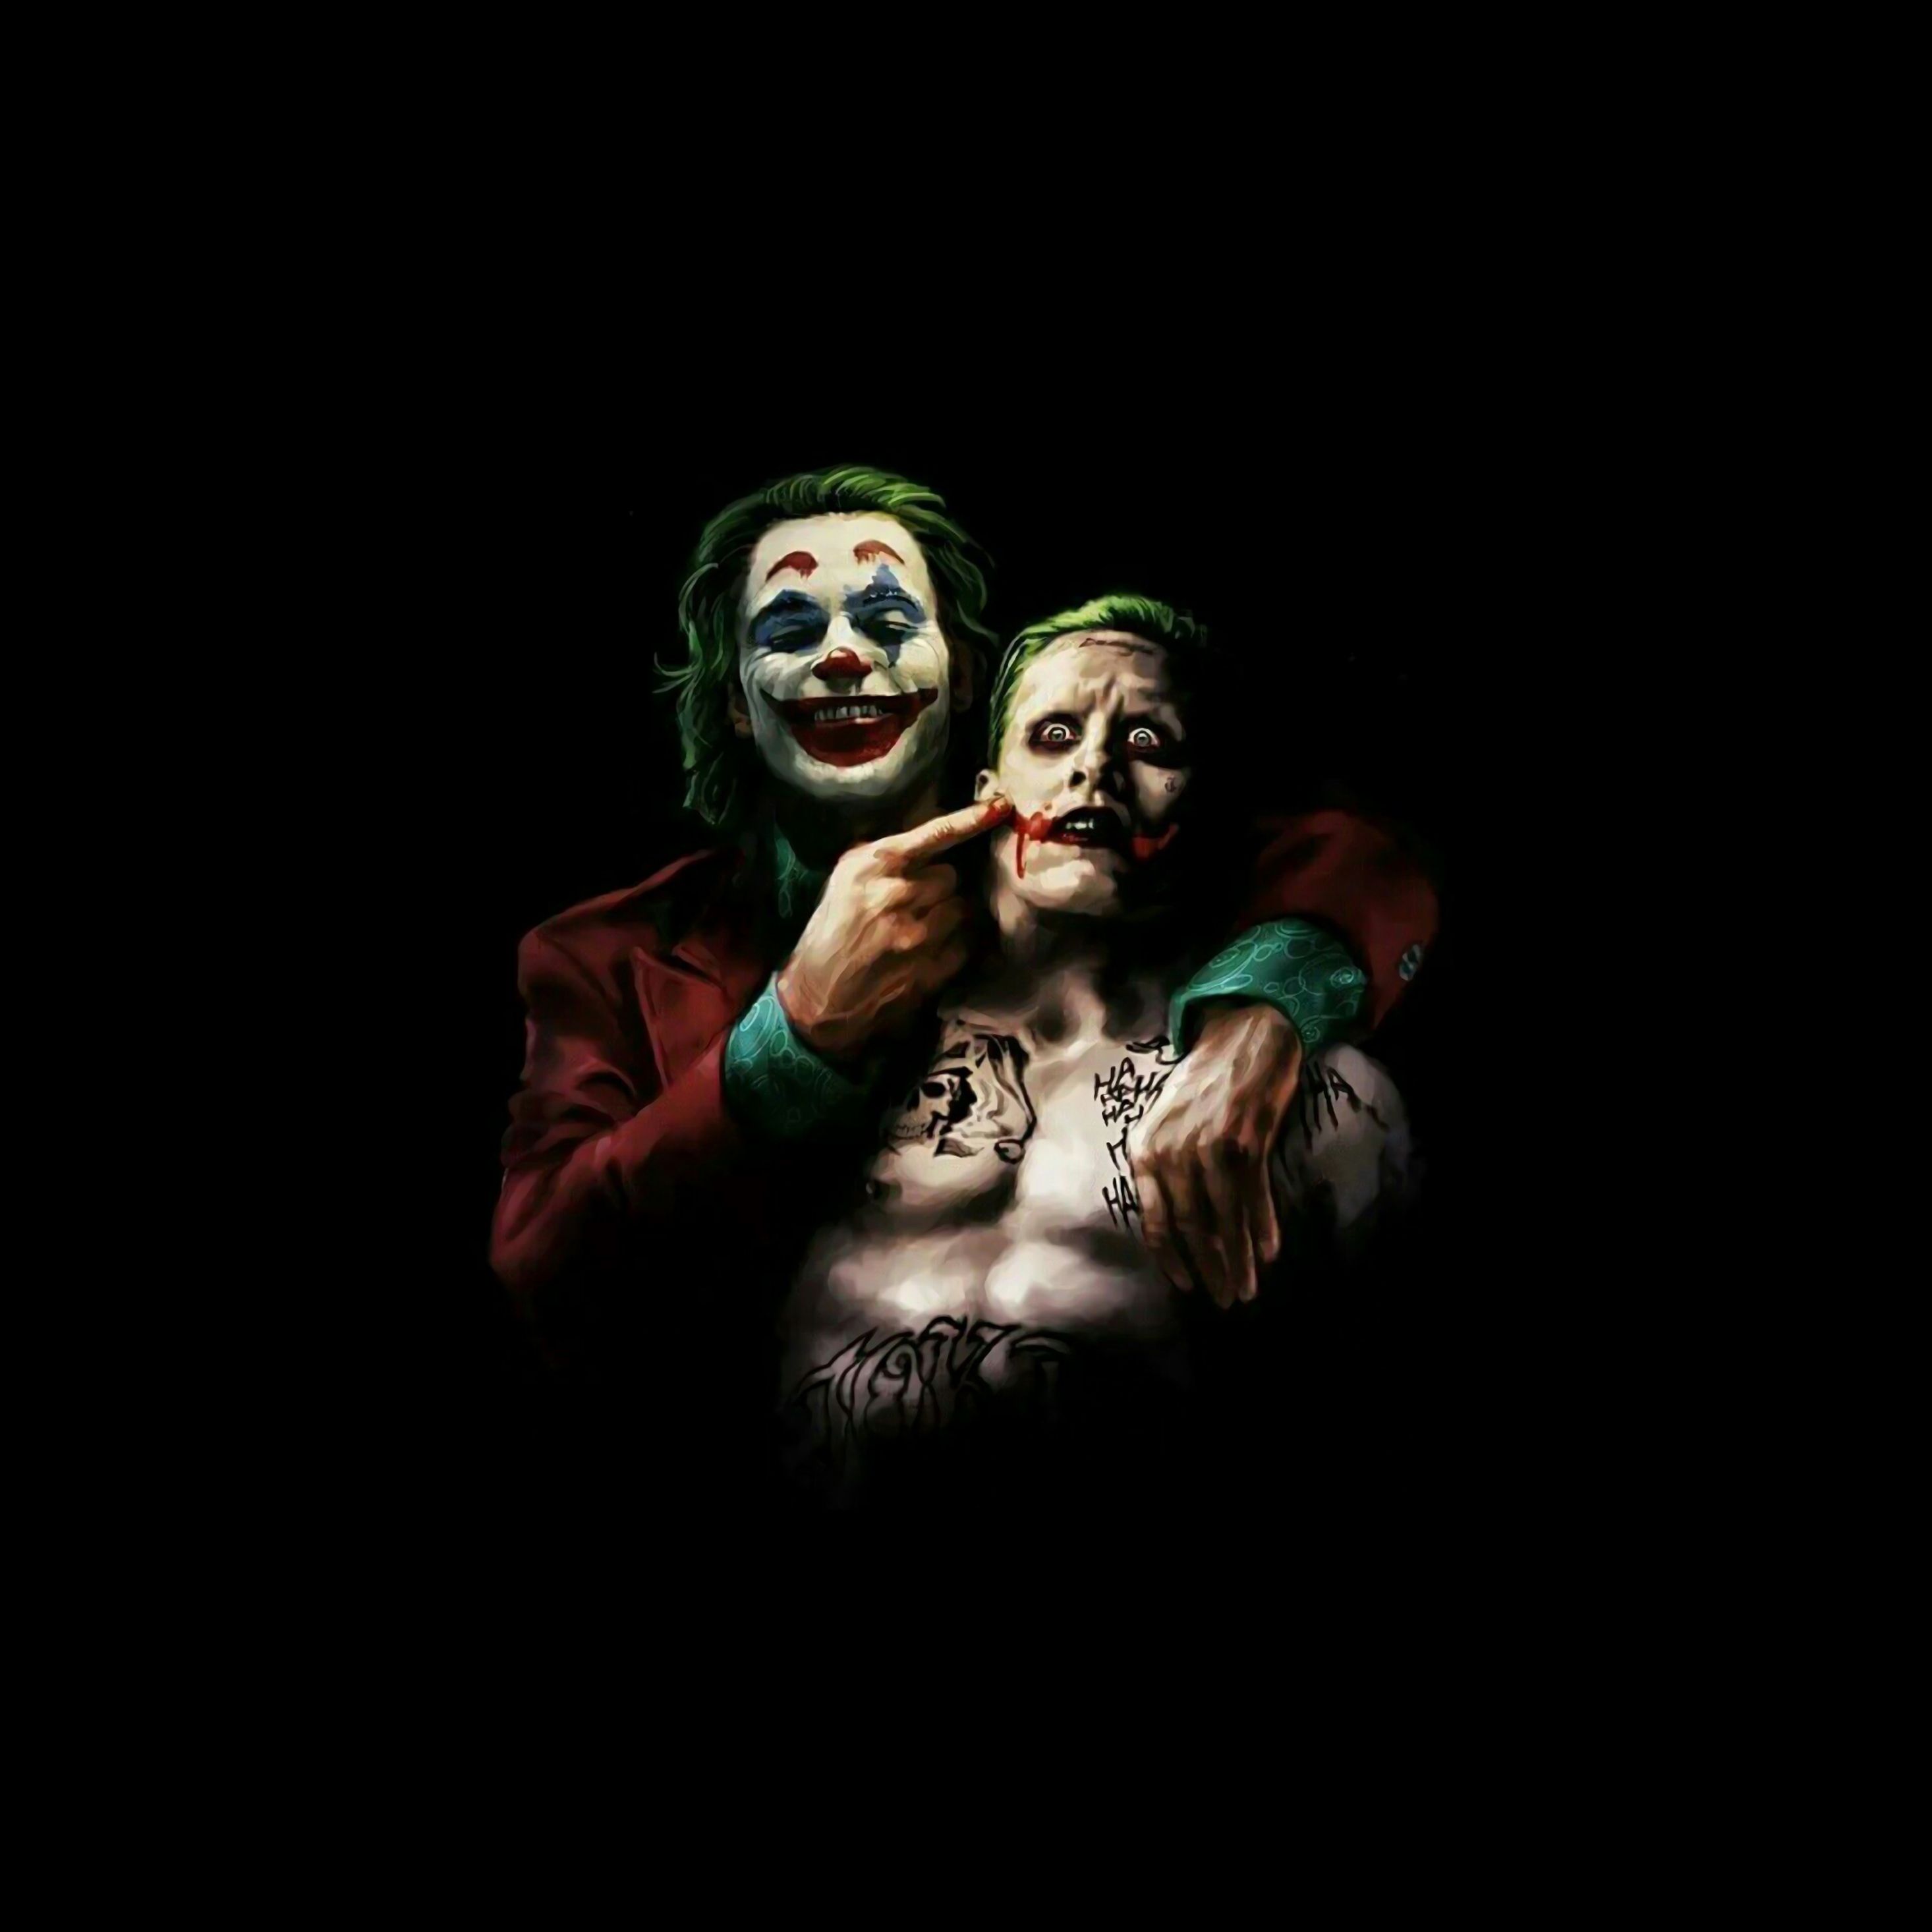 Joaquin Phoenix And Jared Leto As Joker 4k iPad Pro Retina Display HD 4k Wallpaper, Image, Background, Photo and Picture